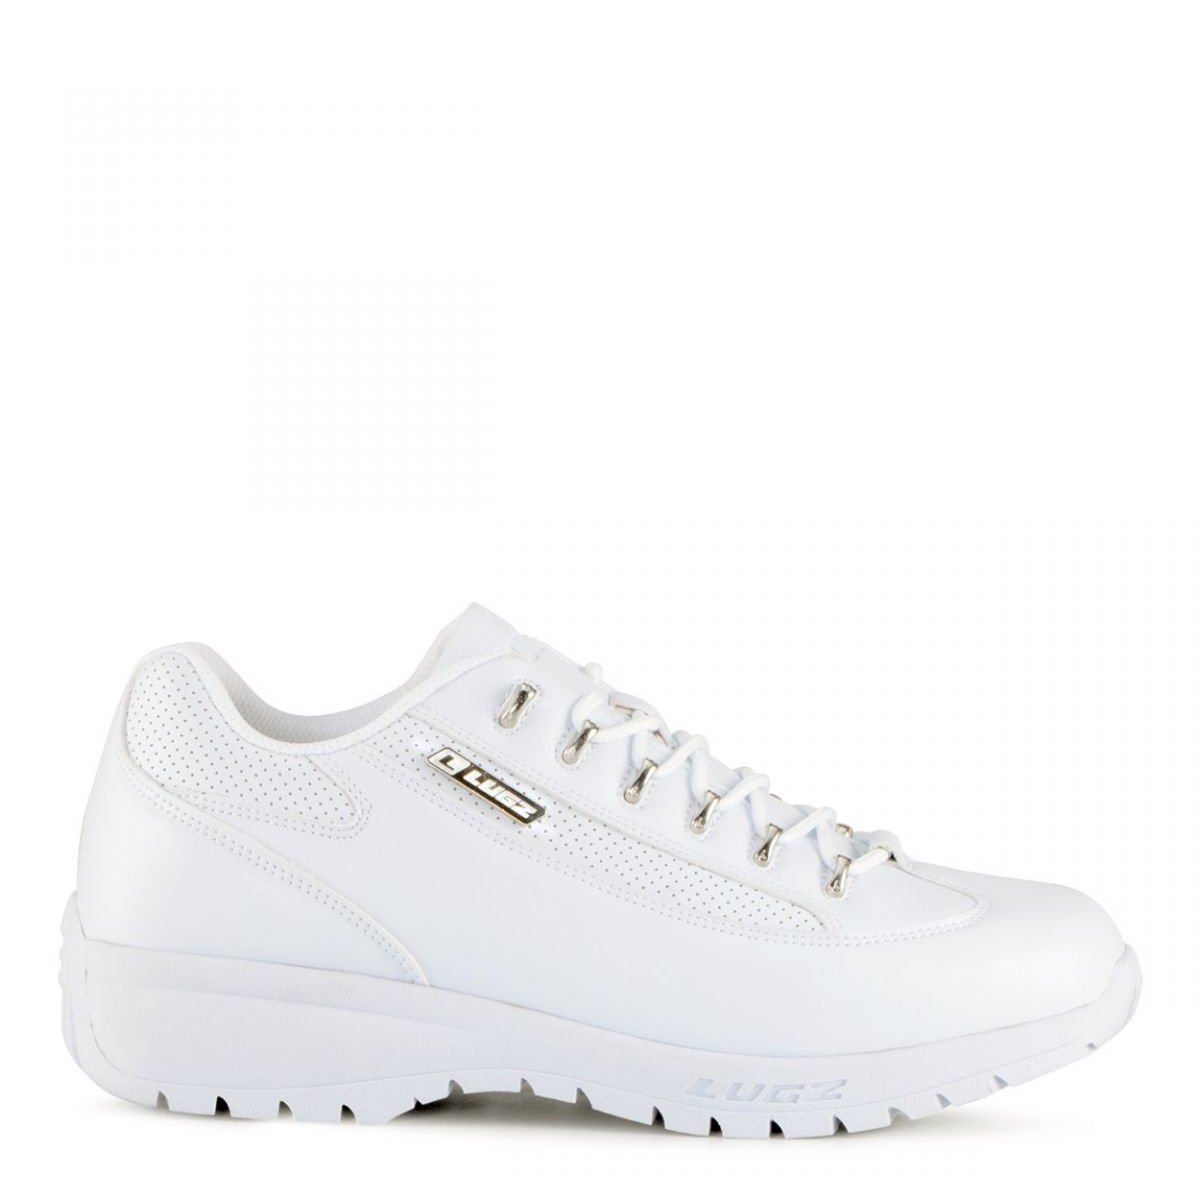 Lugz Men's Express Sneaker White - MEXPRSPV-100 WHITE - WHITE, 11.5